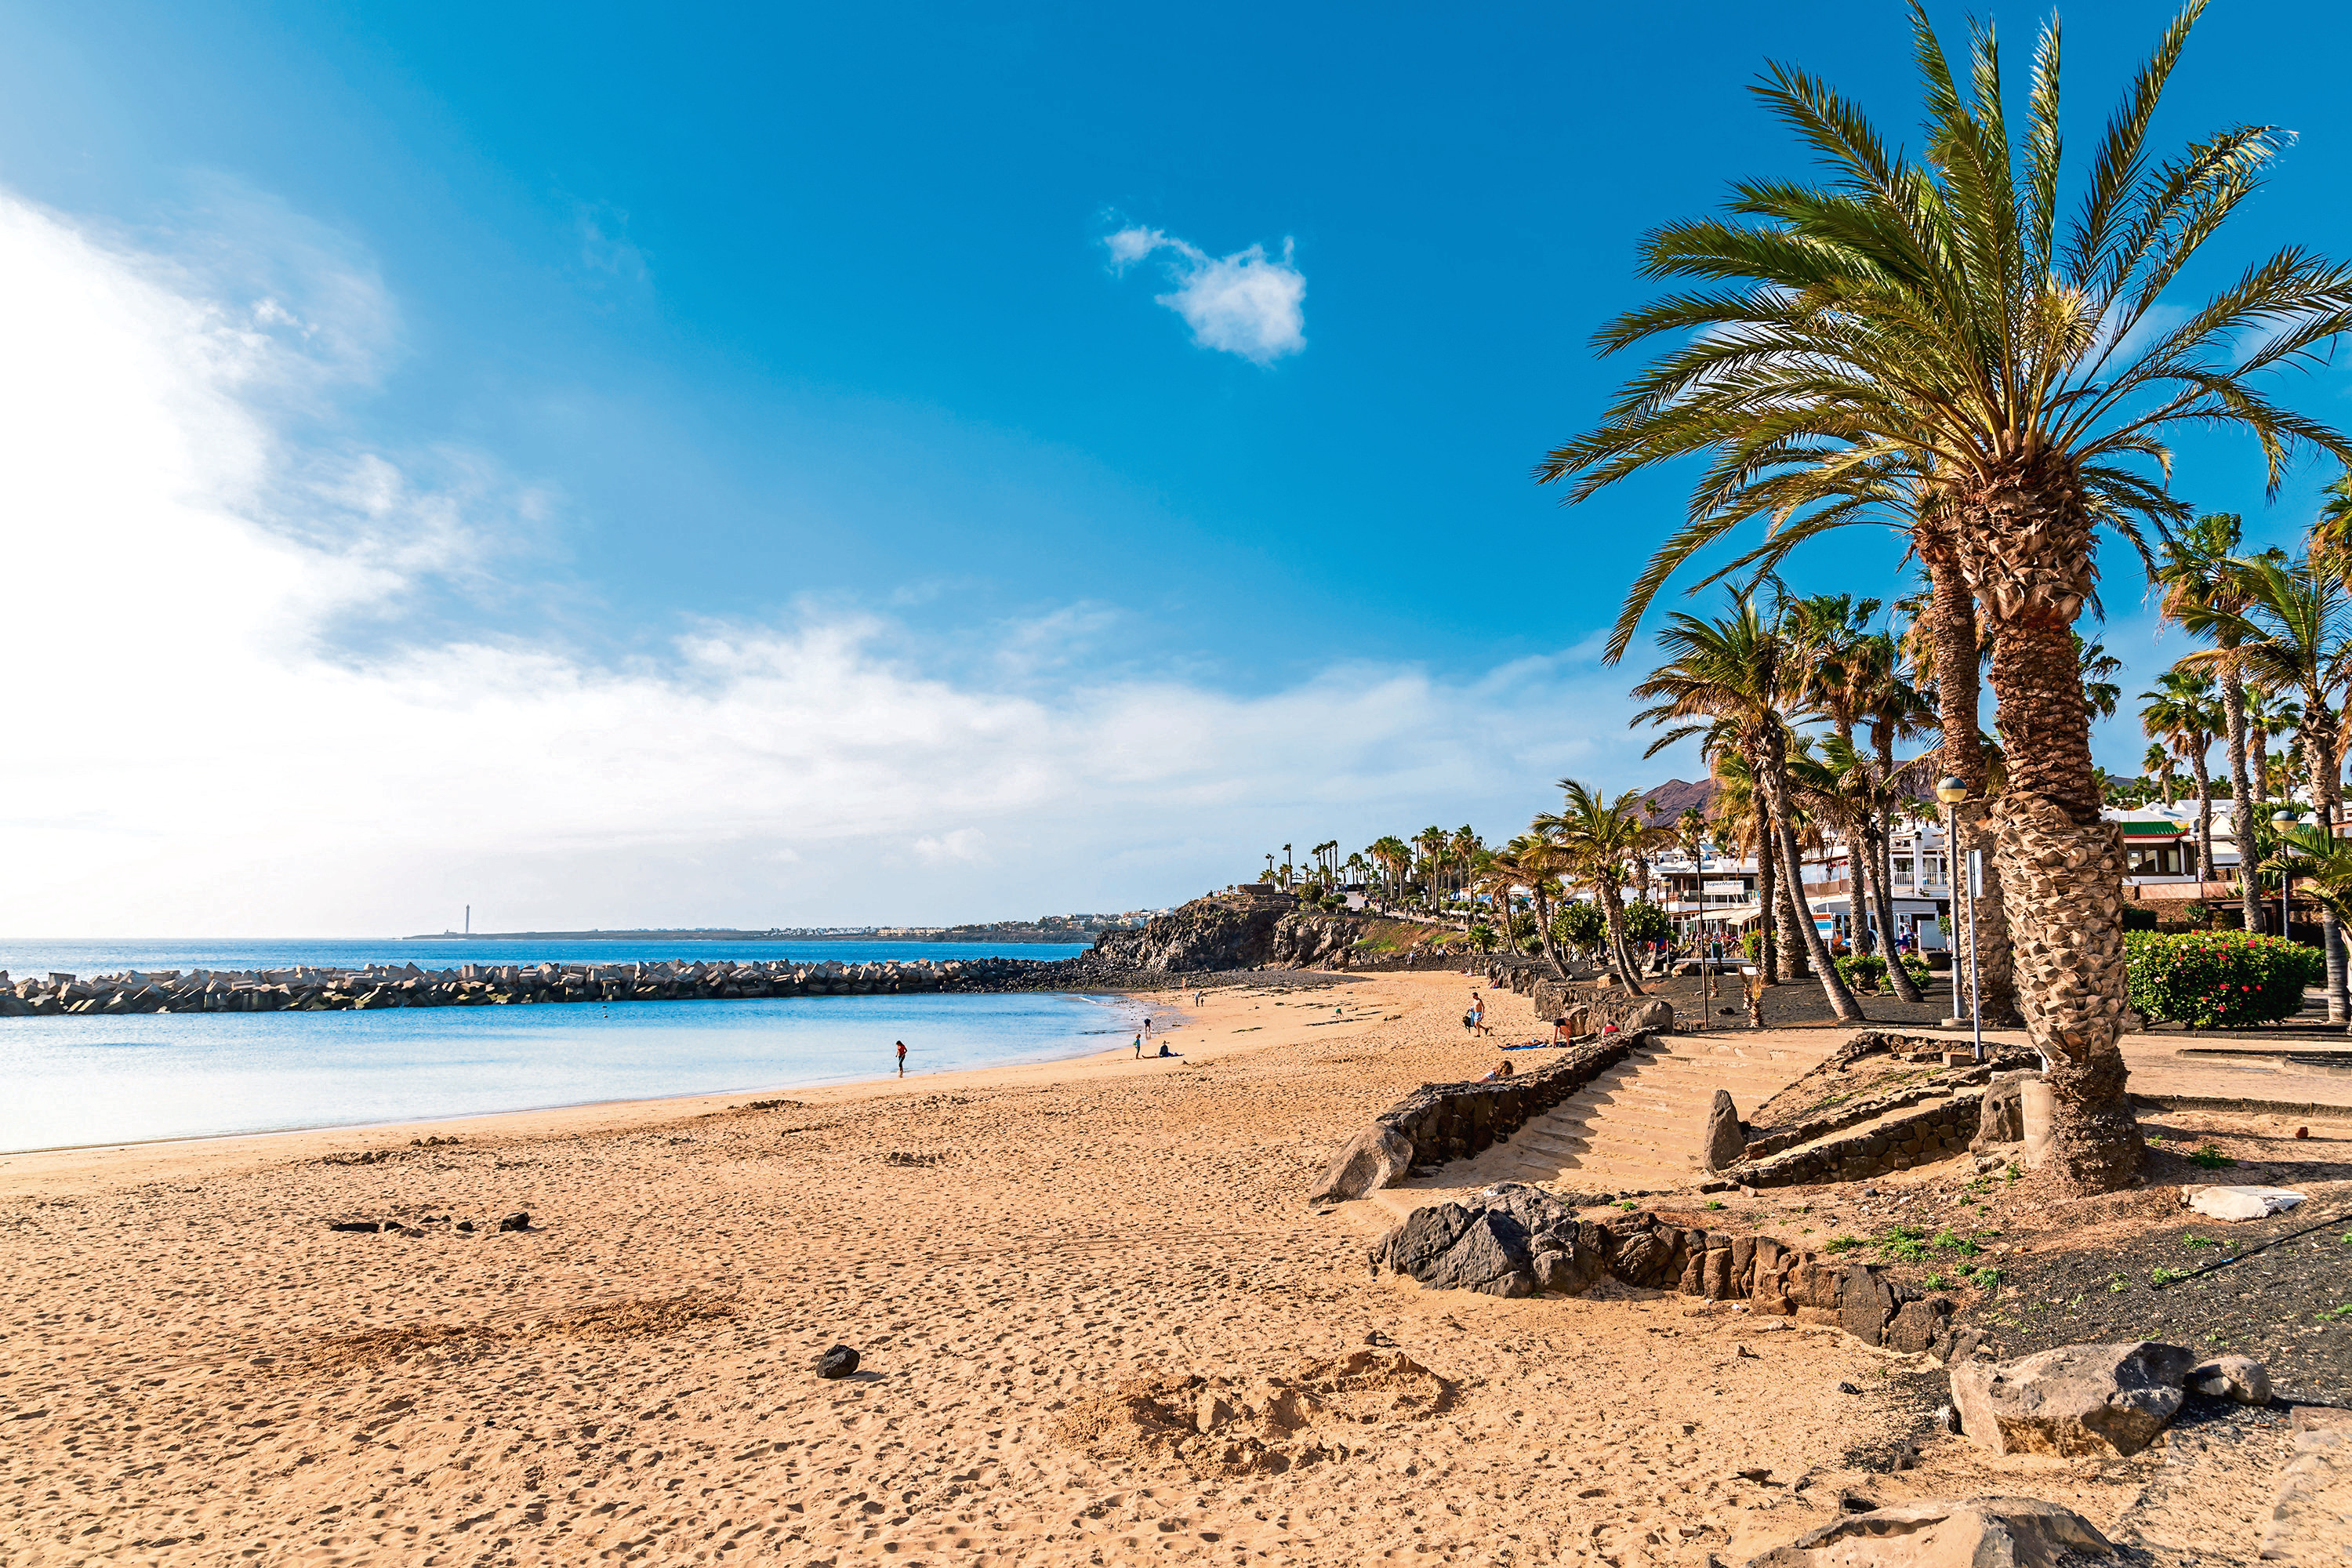 Flamingo beach with palm trees in Playa Blanca holiday village on coast of Lanzarote island, Spain